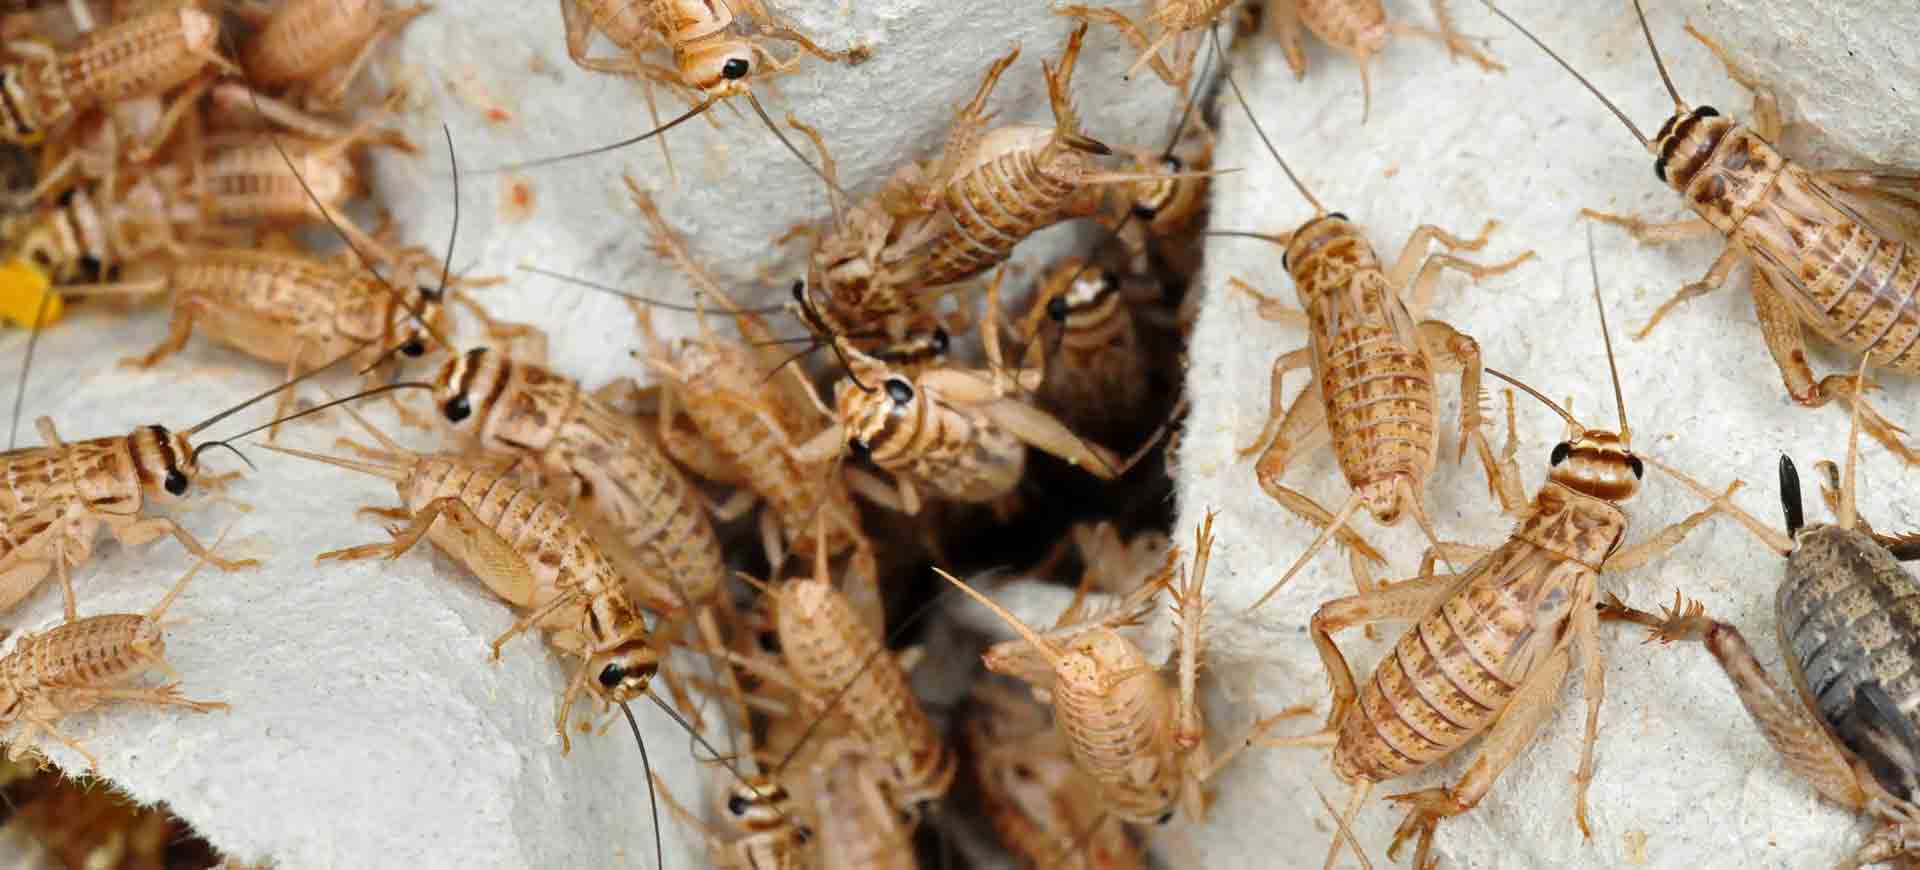 cricket pest control ocean beach